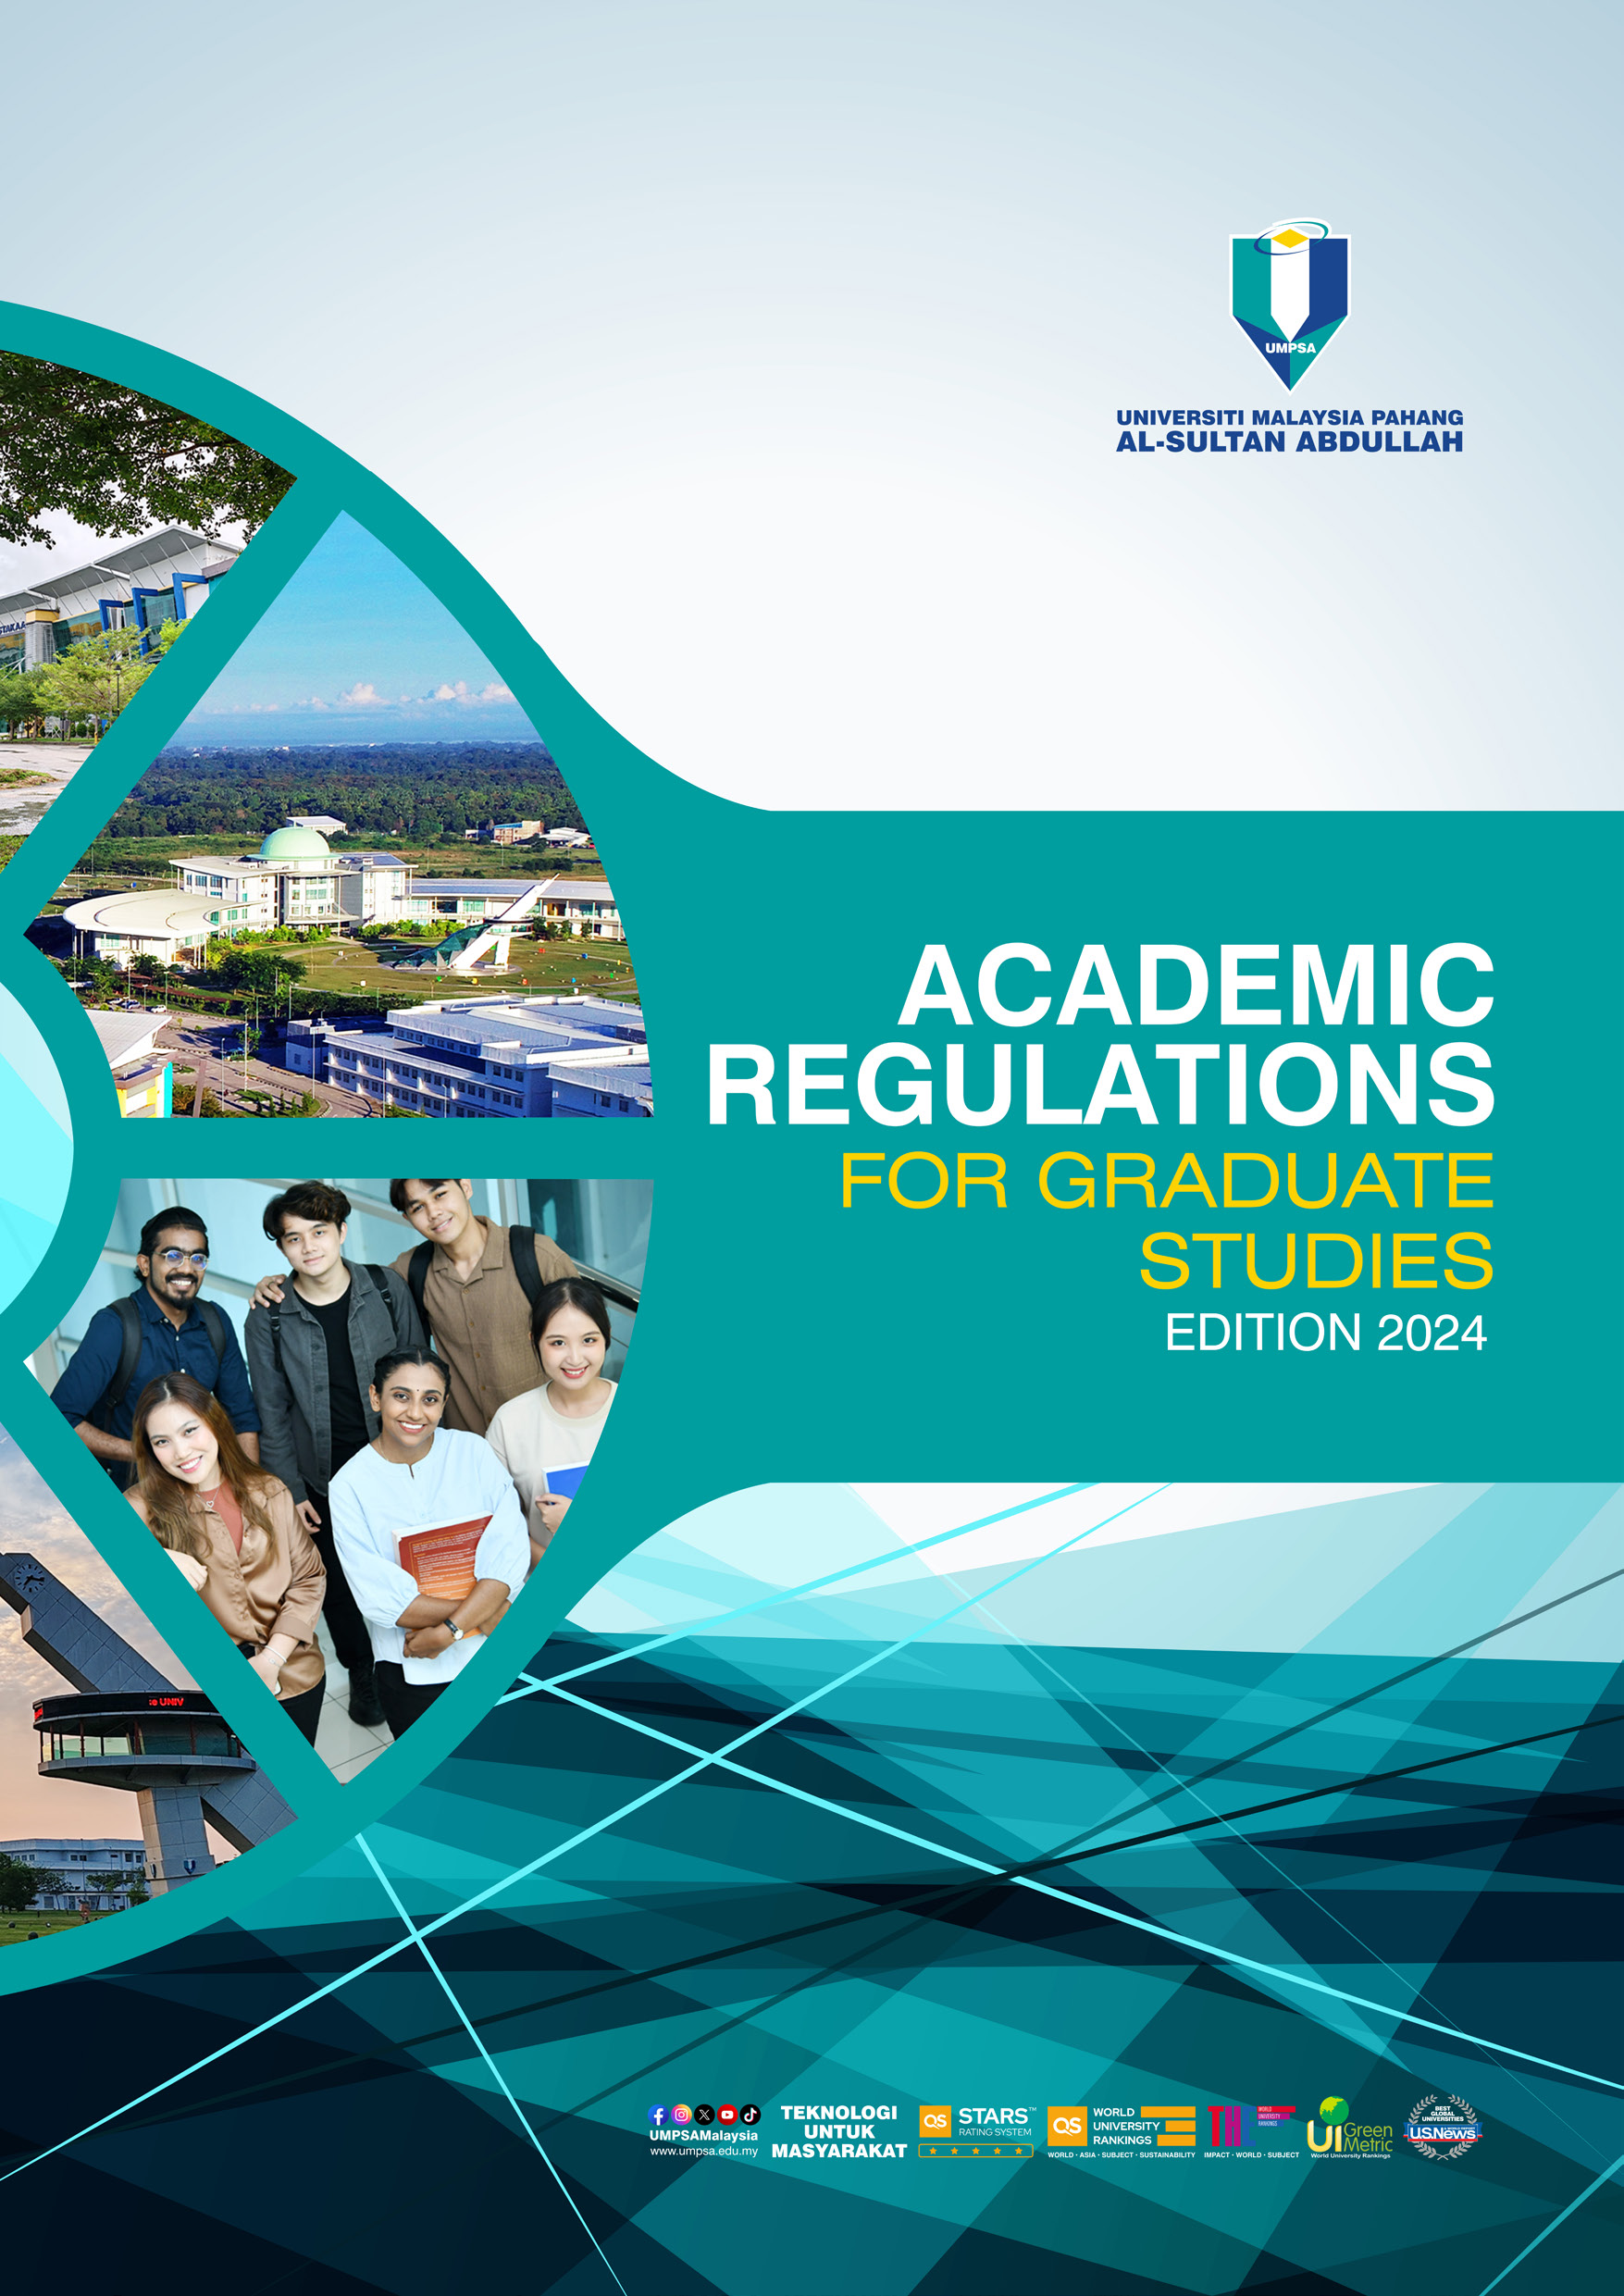 ACADEMIC REGULATIONS FOR GRADUATE STUDIES 2024 EDITION